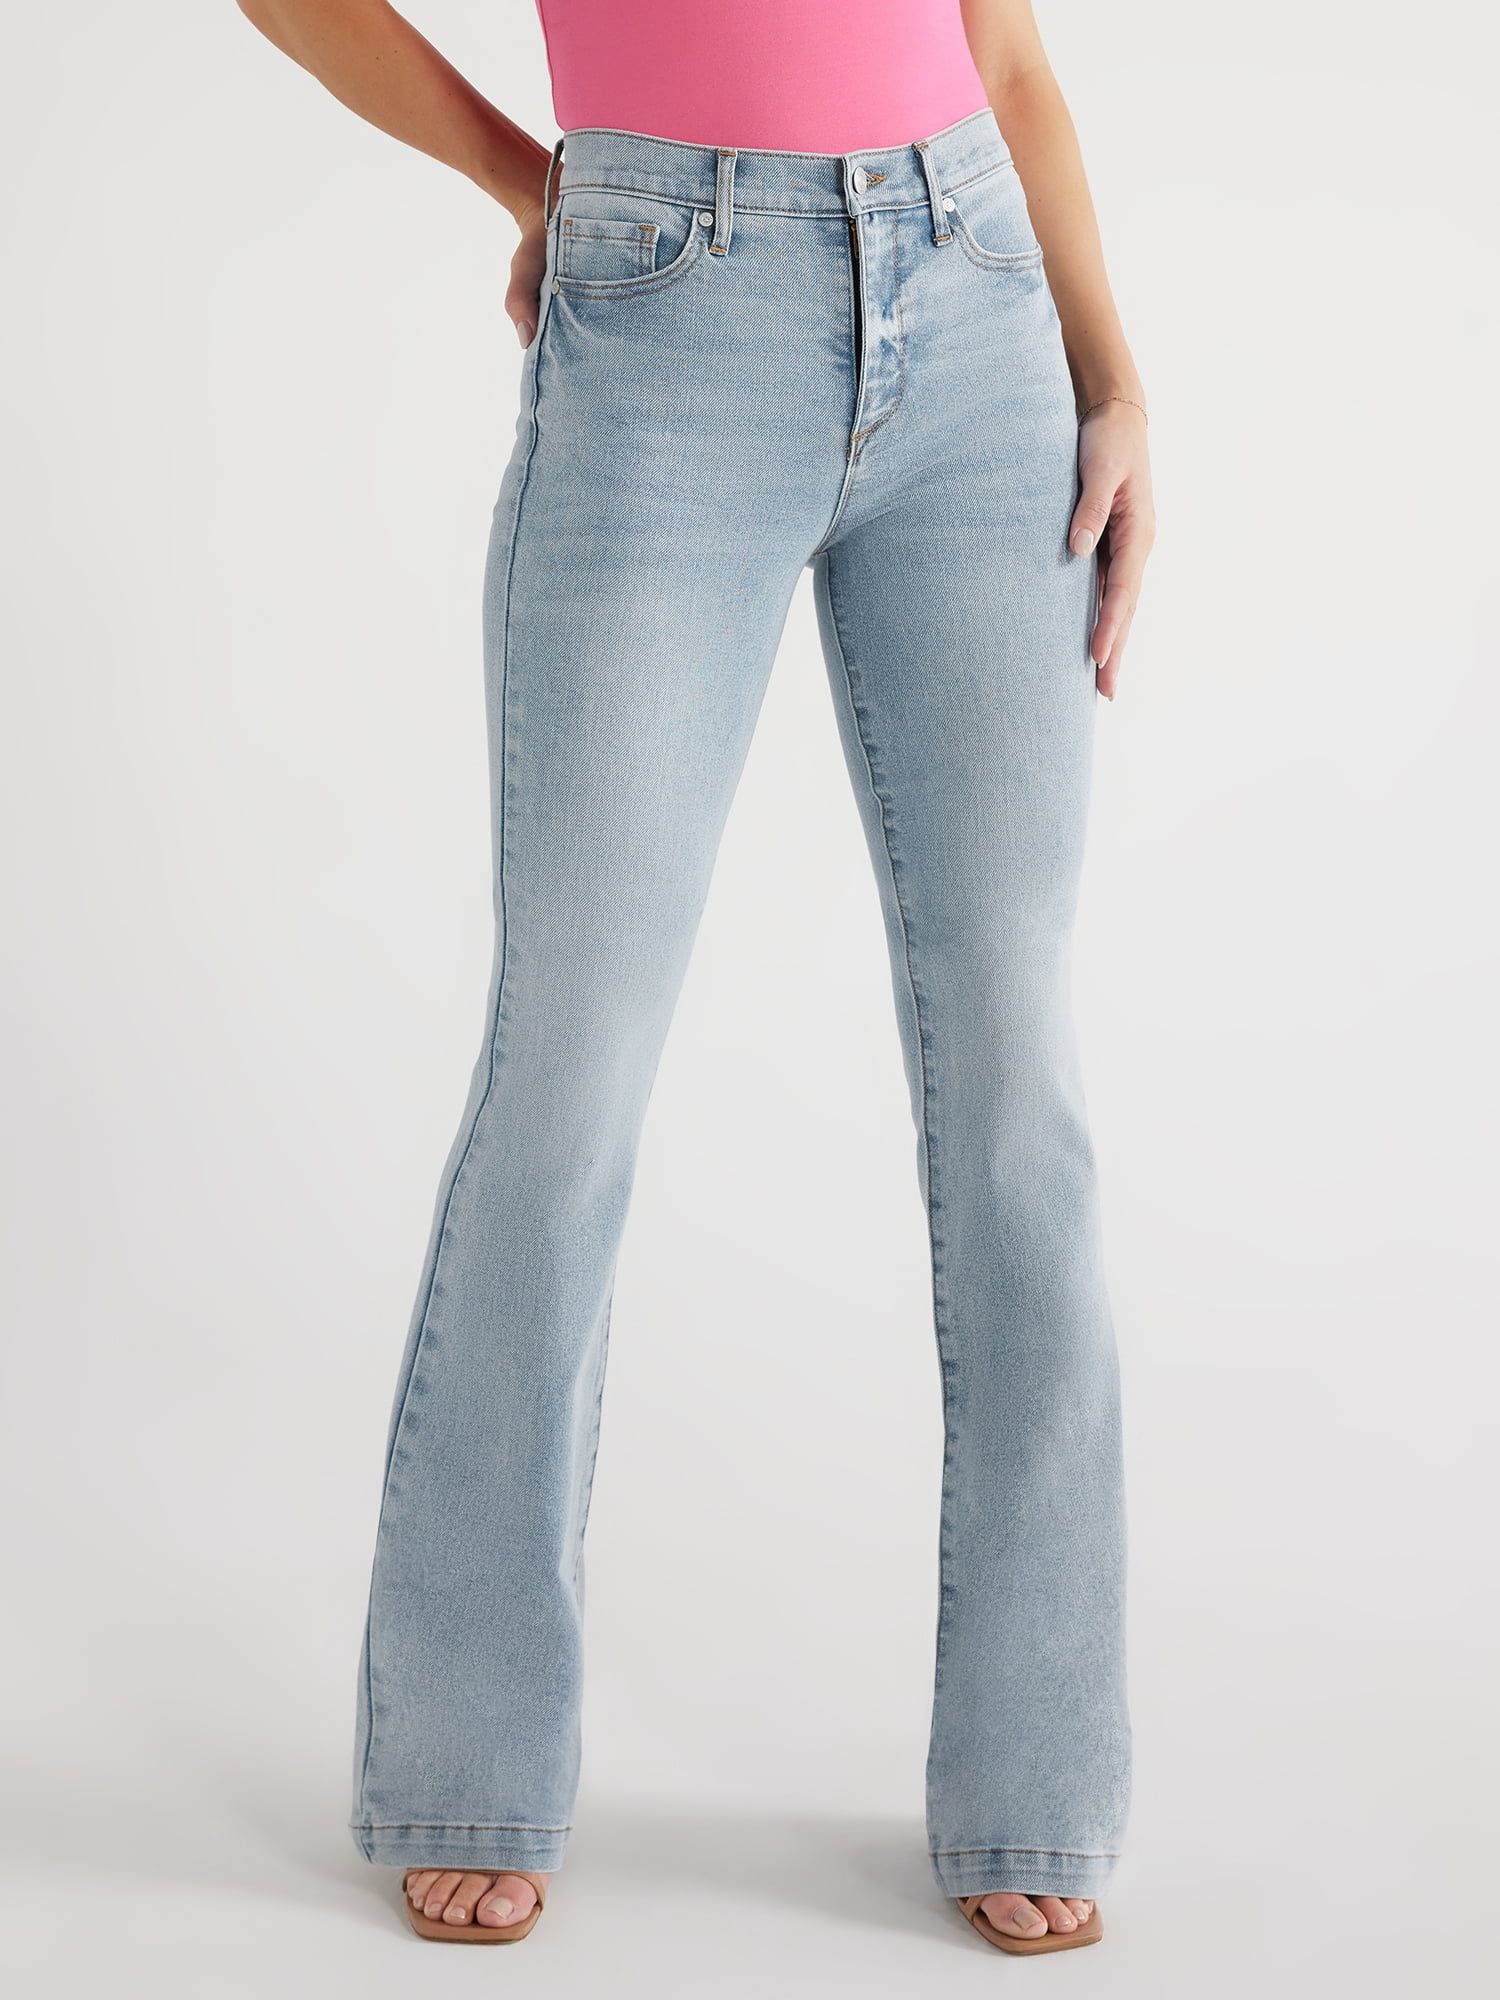 Sofia Jeans Women's Melisa Flare High Rise 5 Pocket Jeans, 33.5" Inseam, Sizes 0-20 | Walmart (US)